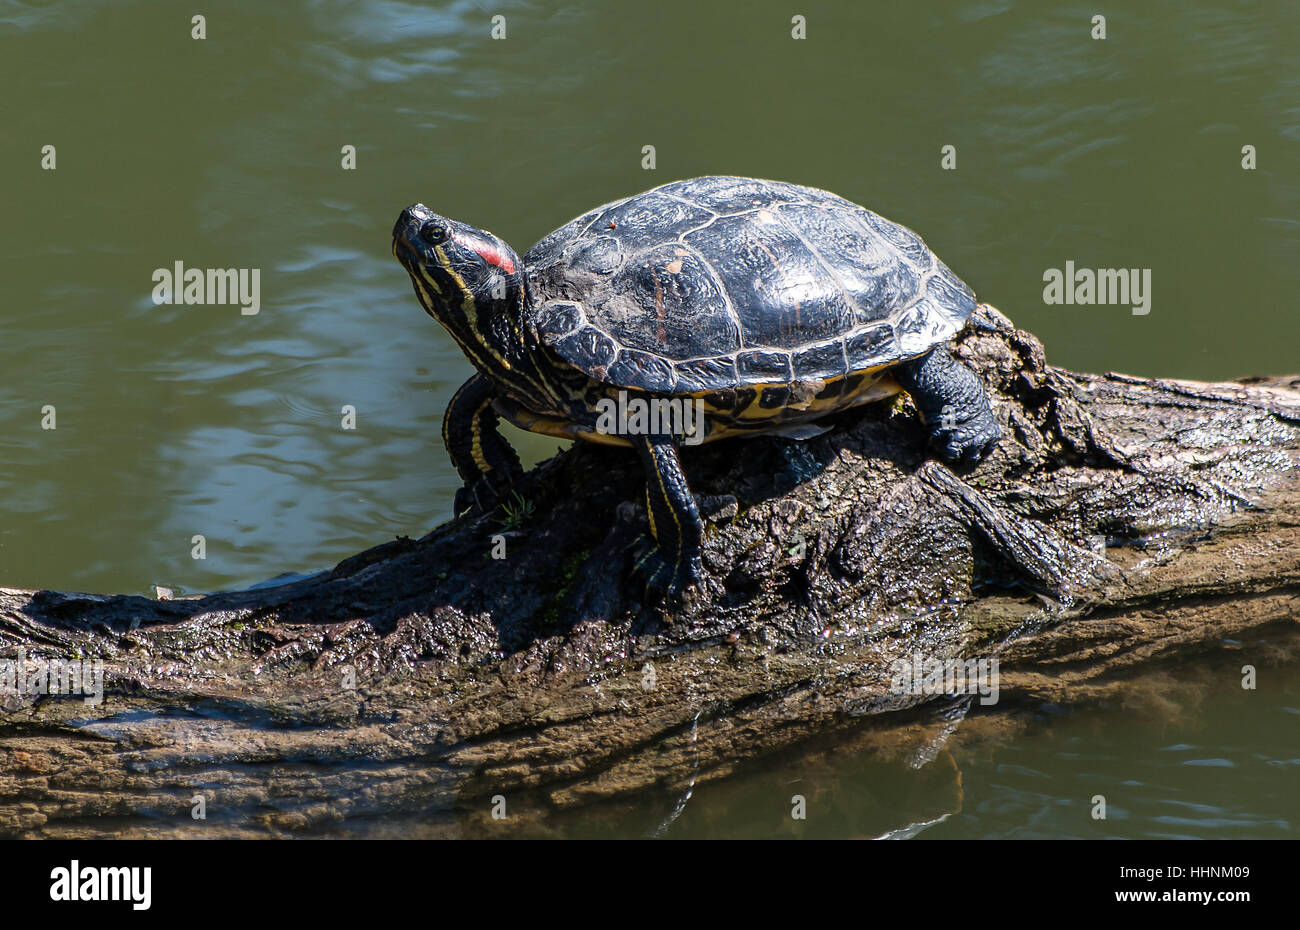 amphibian, reptiles, turtle, sunbathe, sunbathing, tortoise, upwards, waters, Stock Photo